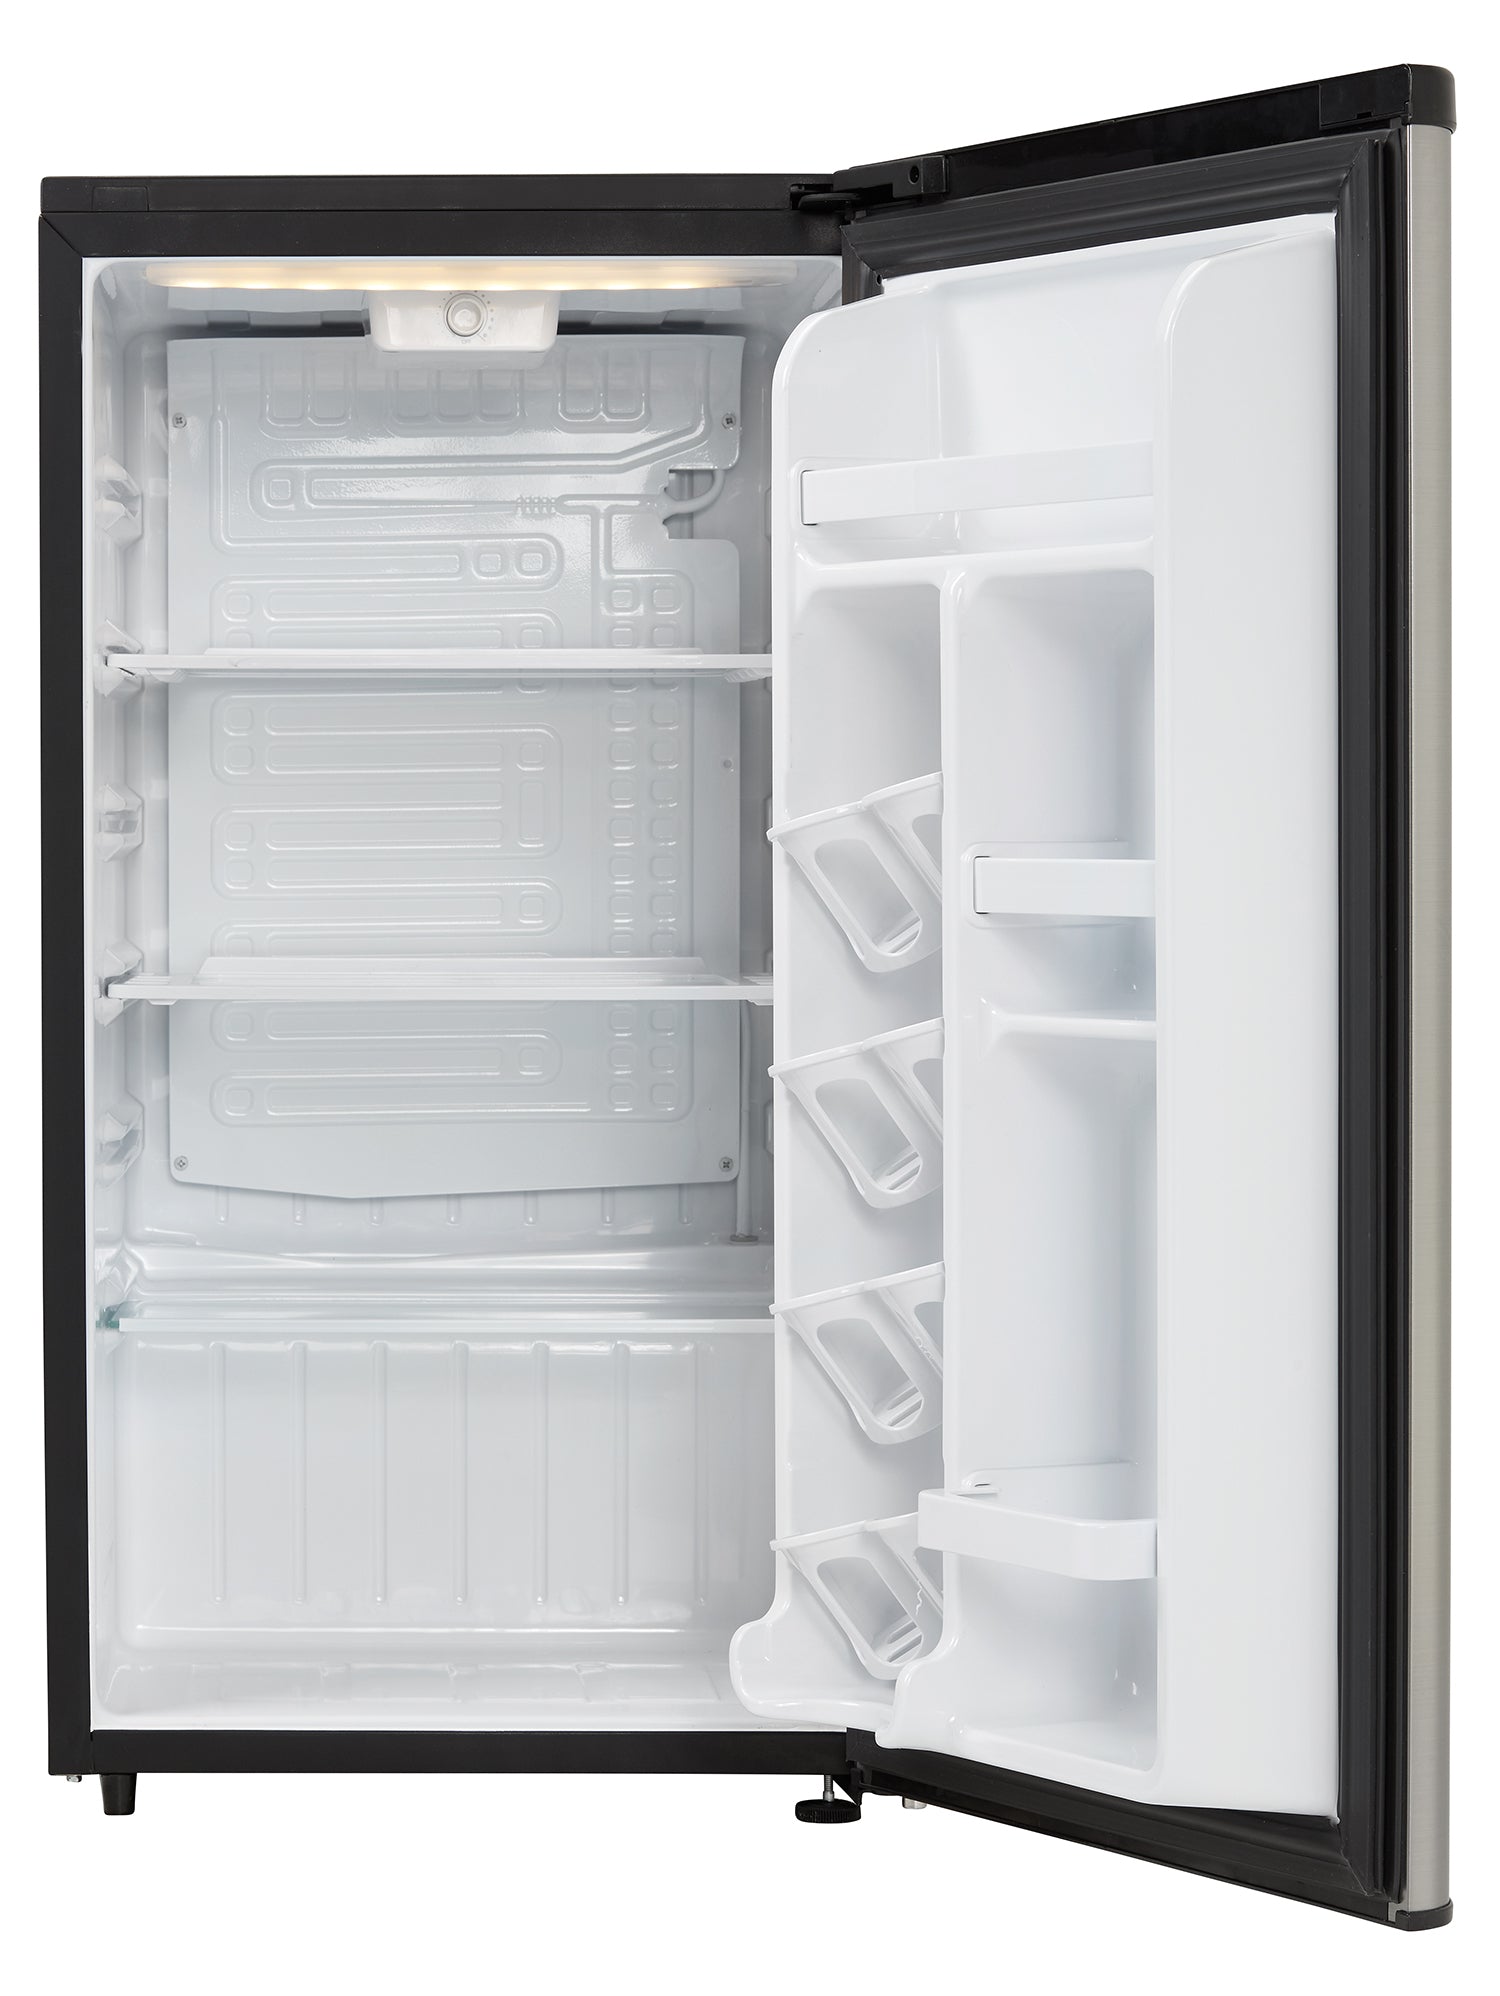 Danby - 17.7 Inch 3.3 cu. ft Mini Fridge Refrigerator in Black Stainless - DAR033A6BSLDB-6